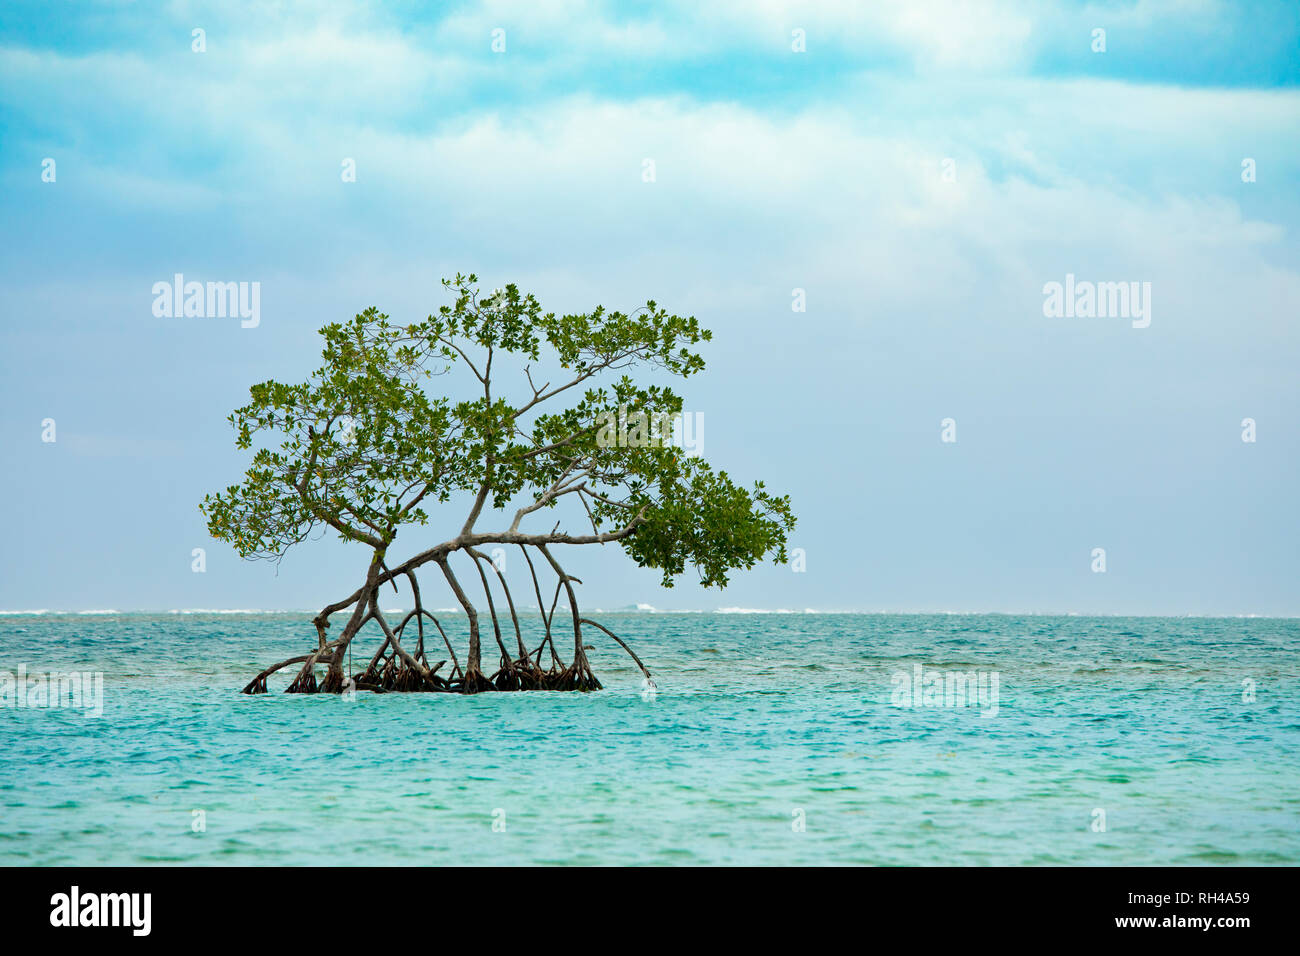 Single mangrove tree growing in the turquoise waters of the Caribbean sea off Roatan, Honduras. Stock Photo